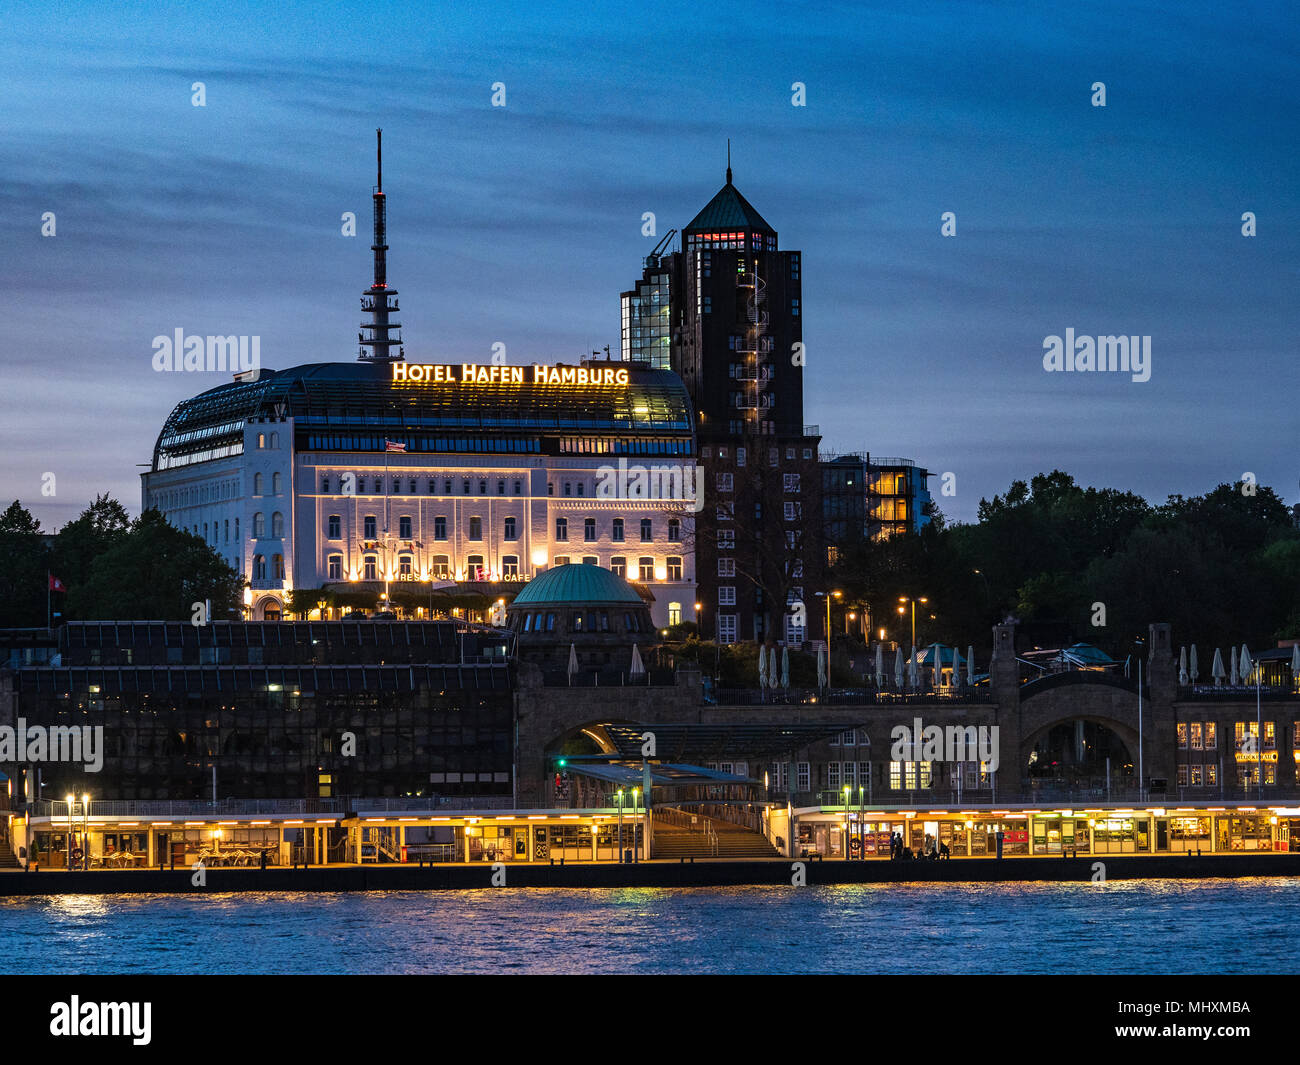 Hotel Hafen Hamburg & Landungsbrücken dock Hamburg - a 700 meter long floating dock on the River Elbe in the centre of Hamburg Stock Photo